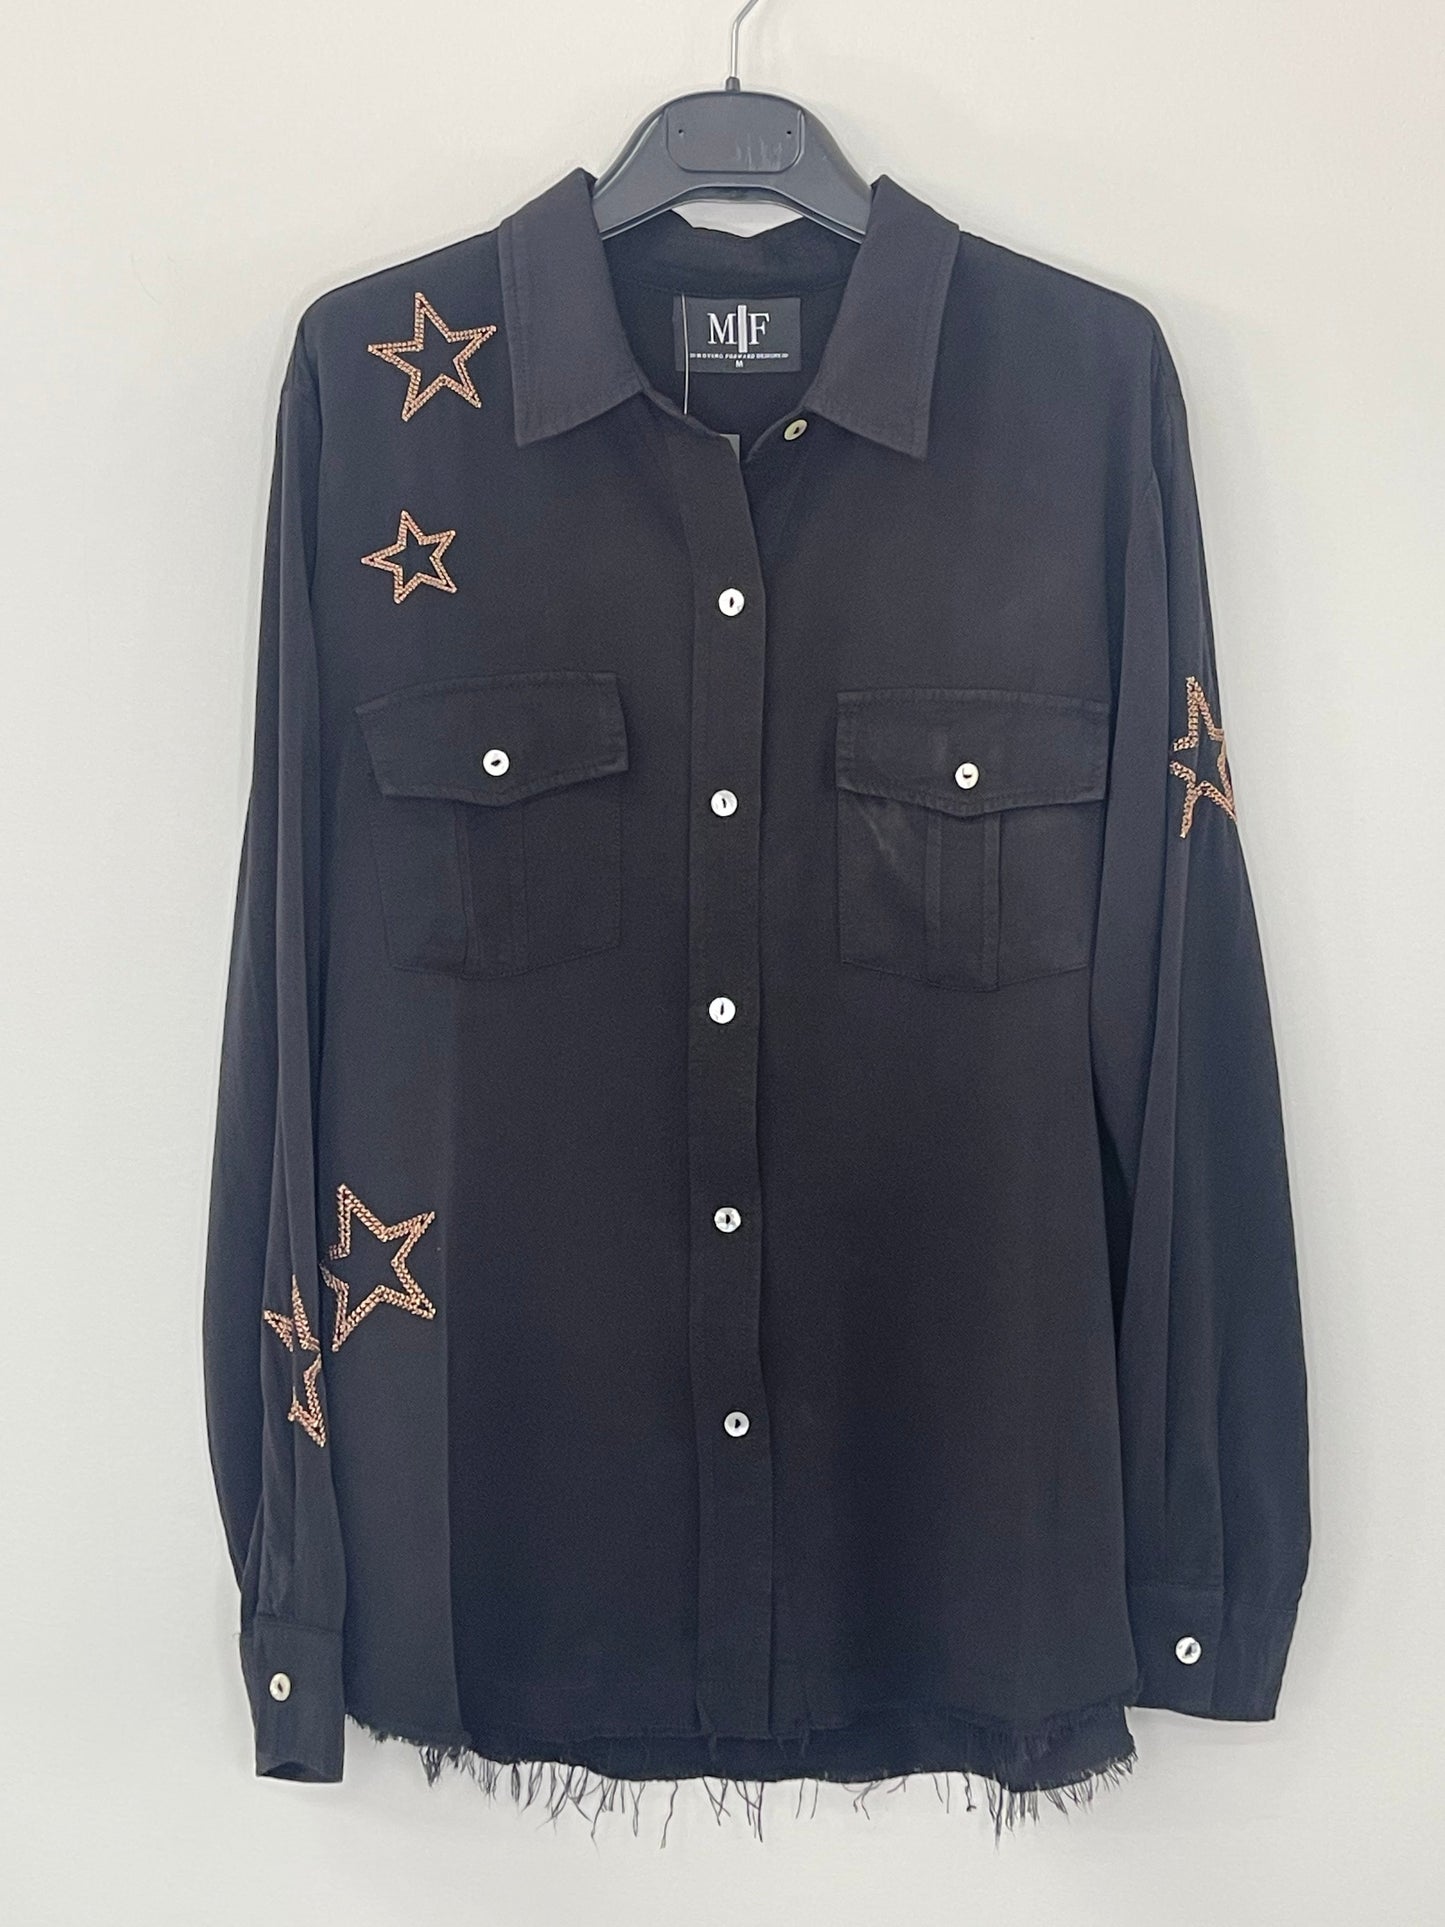 Shirt, Embroidered Star Black, Gunmetal Love Repeater